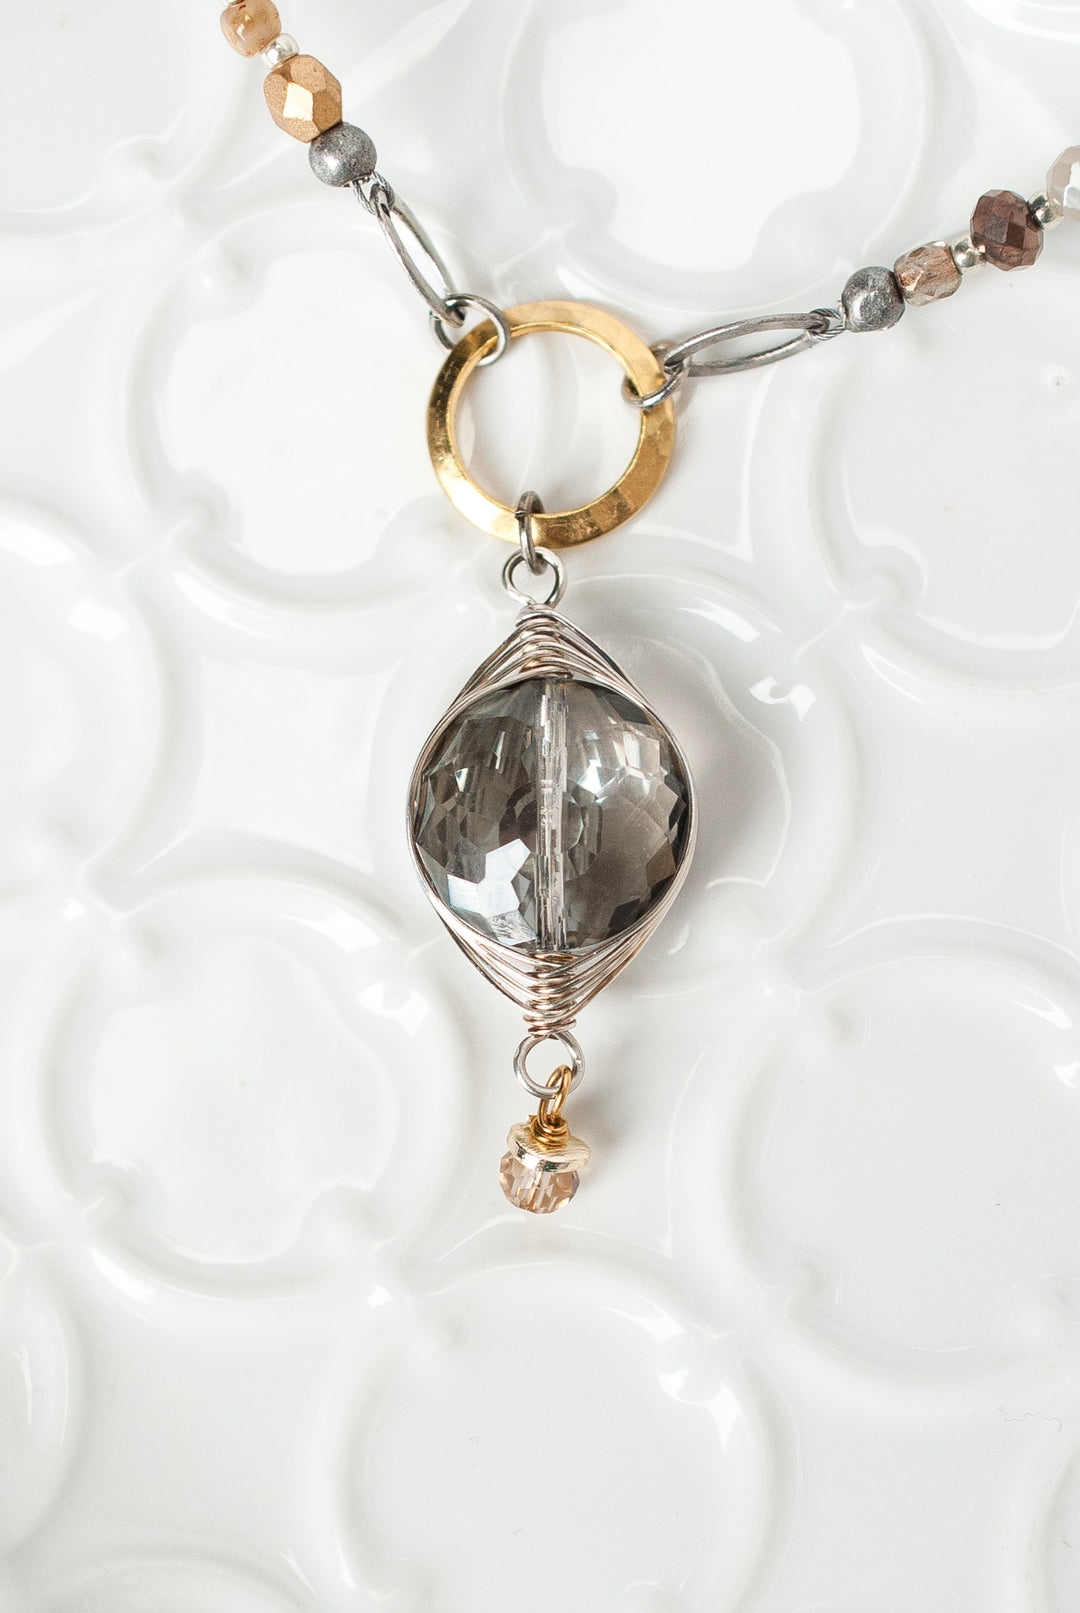 Silver & Gold 17-19" Herringbone Pendant Collage Necklace